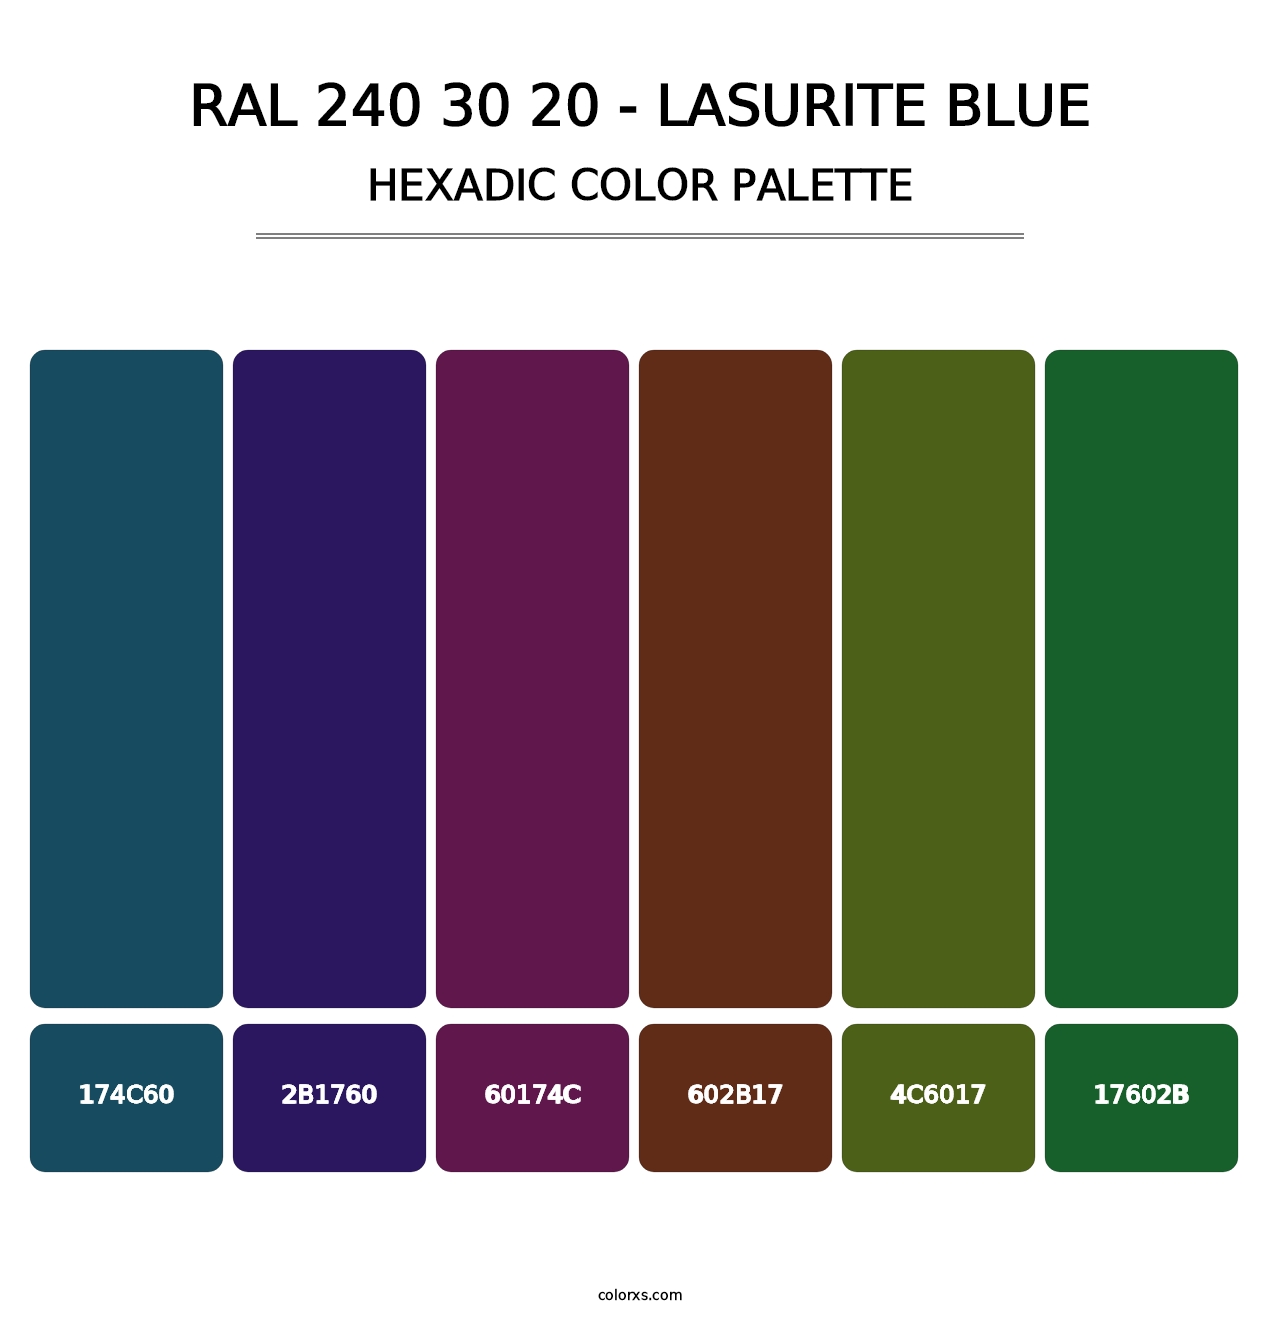 RAL 240 30 20 - Lasurite Blue - Hexadic Color Palette